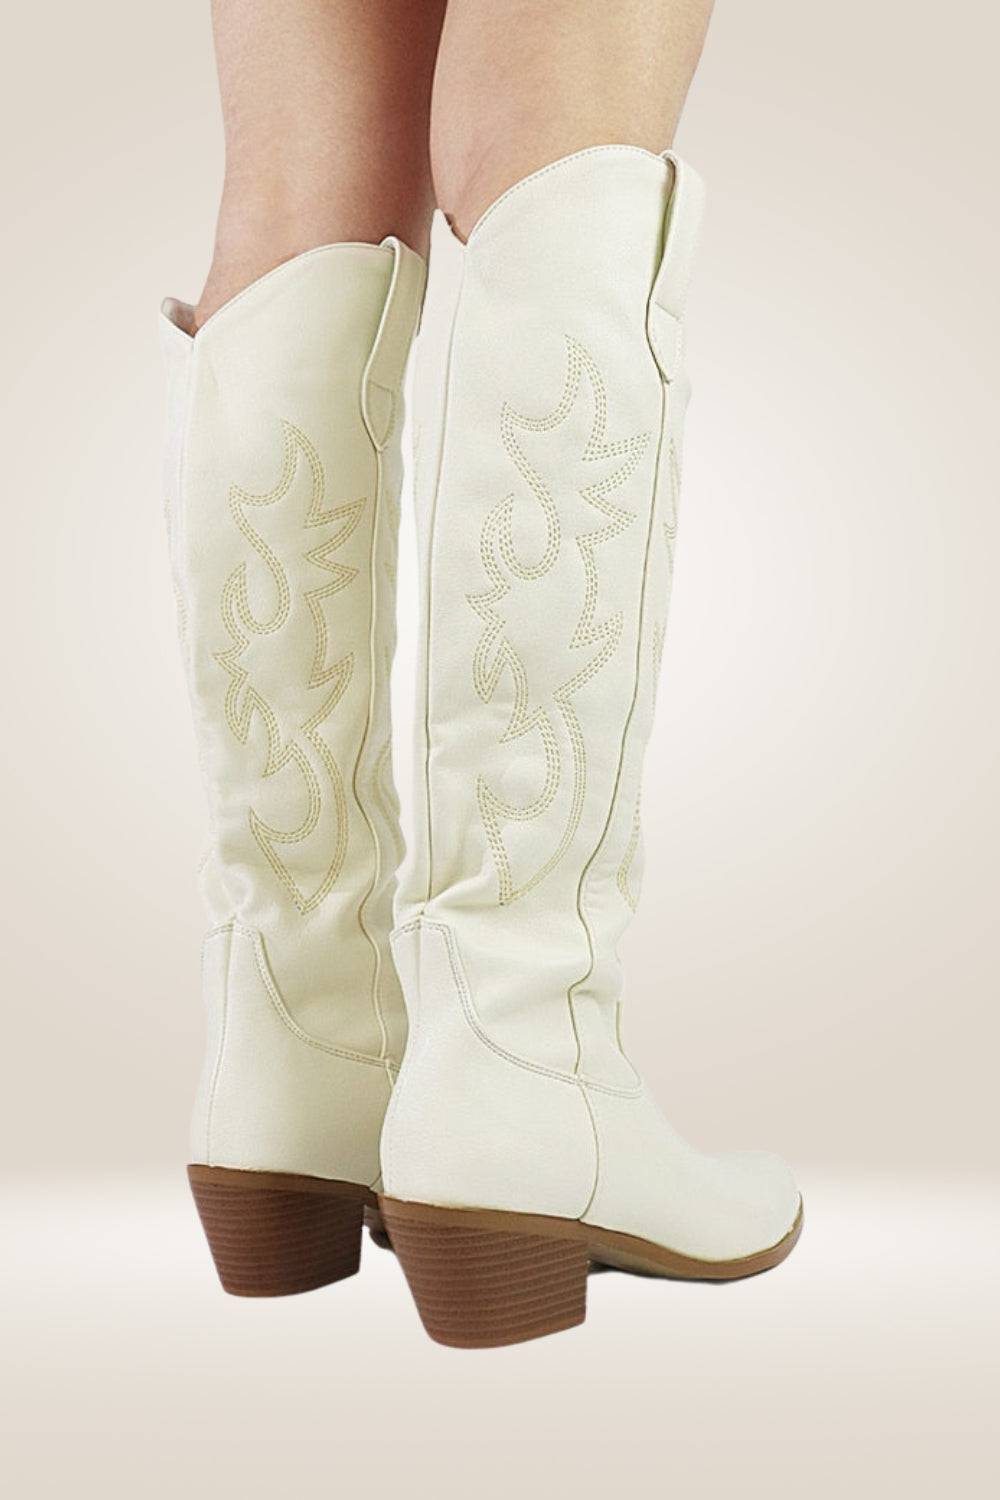 Knee High Cowboy Boots In Beige - TGC Boutique - Cowboy Boots